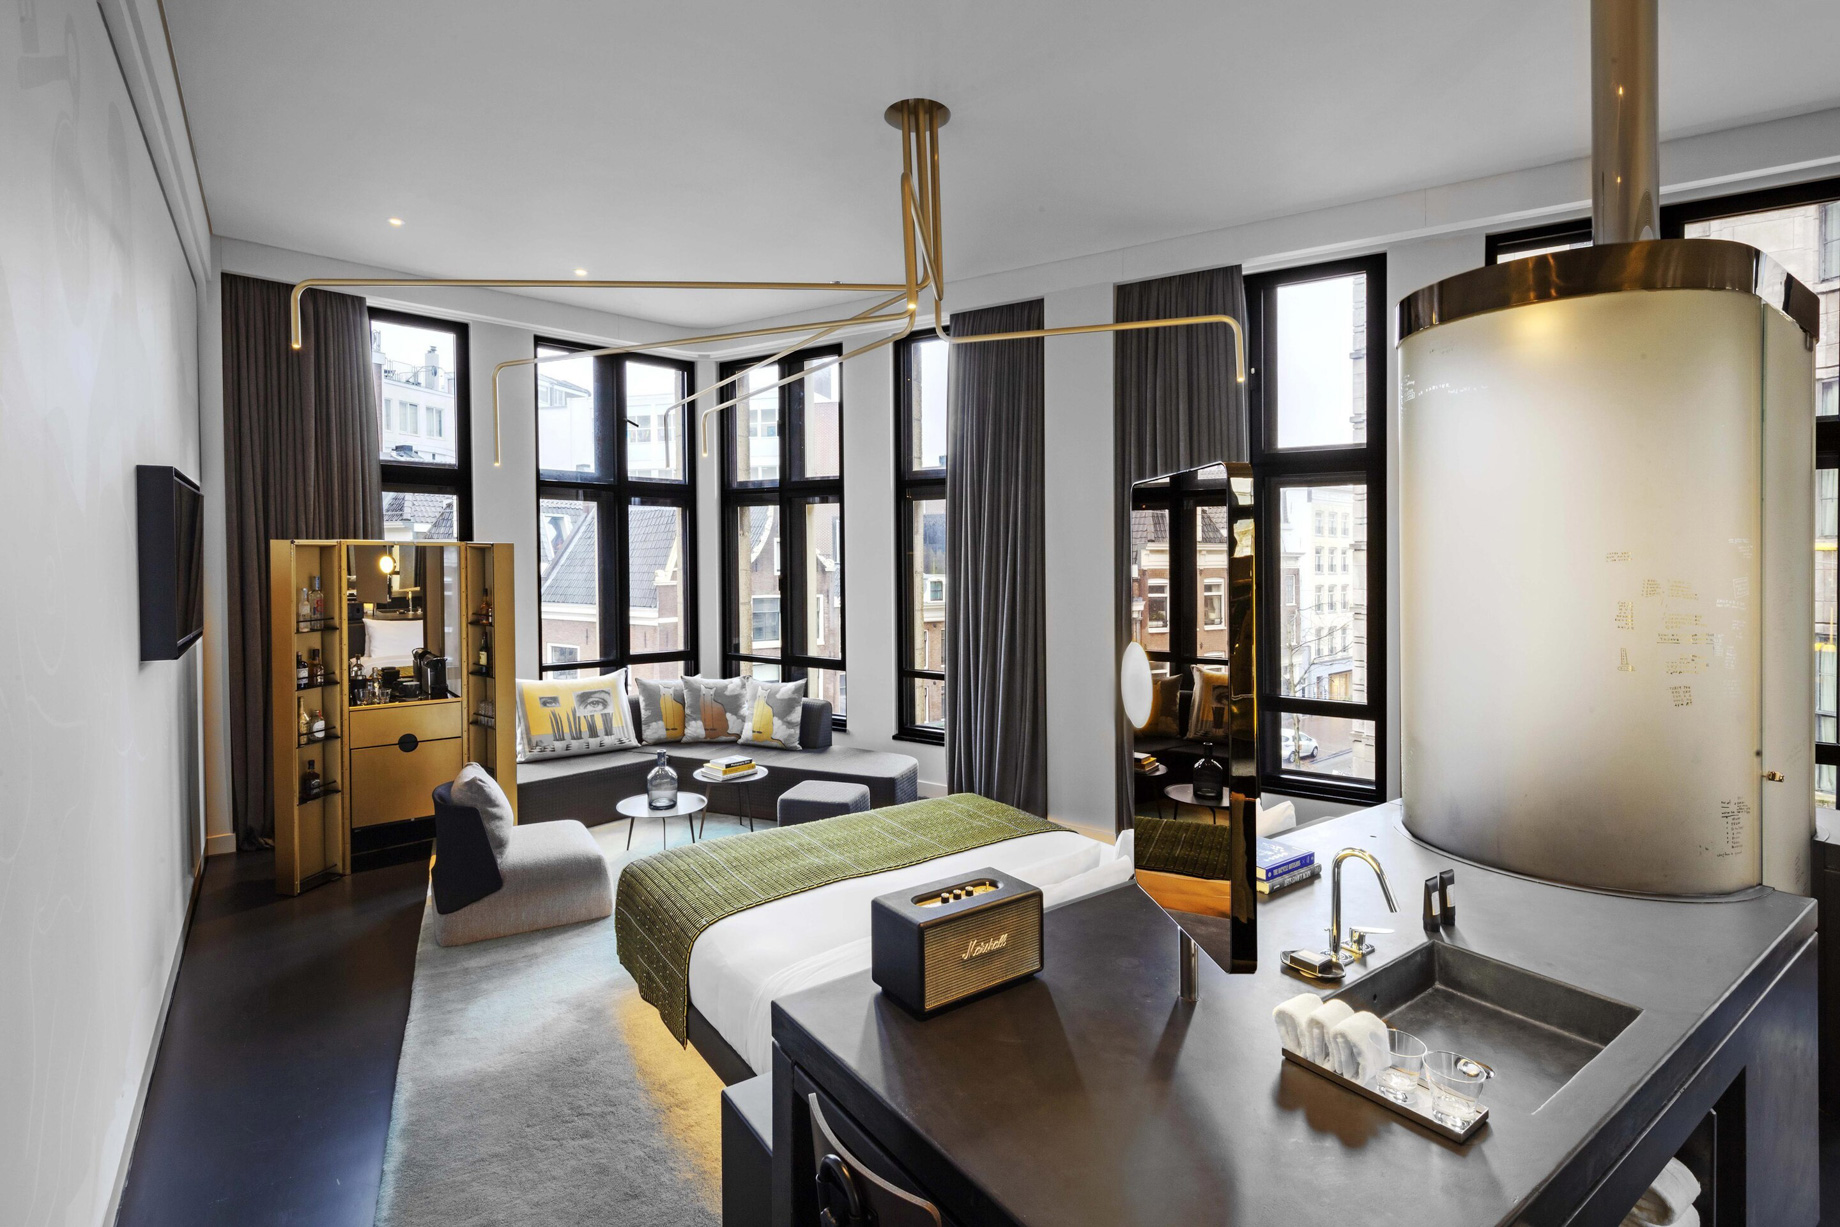 W Amsterdam Hotel – Amsterdam, Netherlands – Studio Bank Suite View